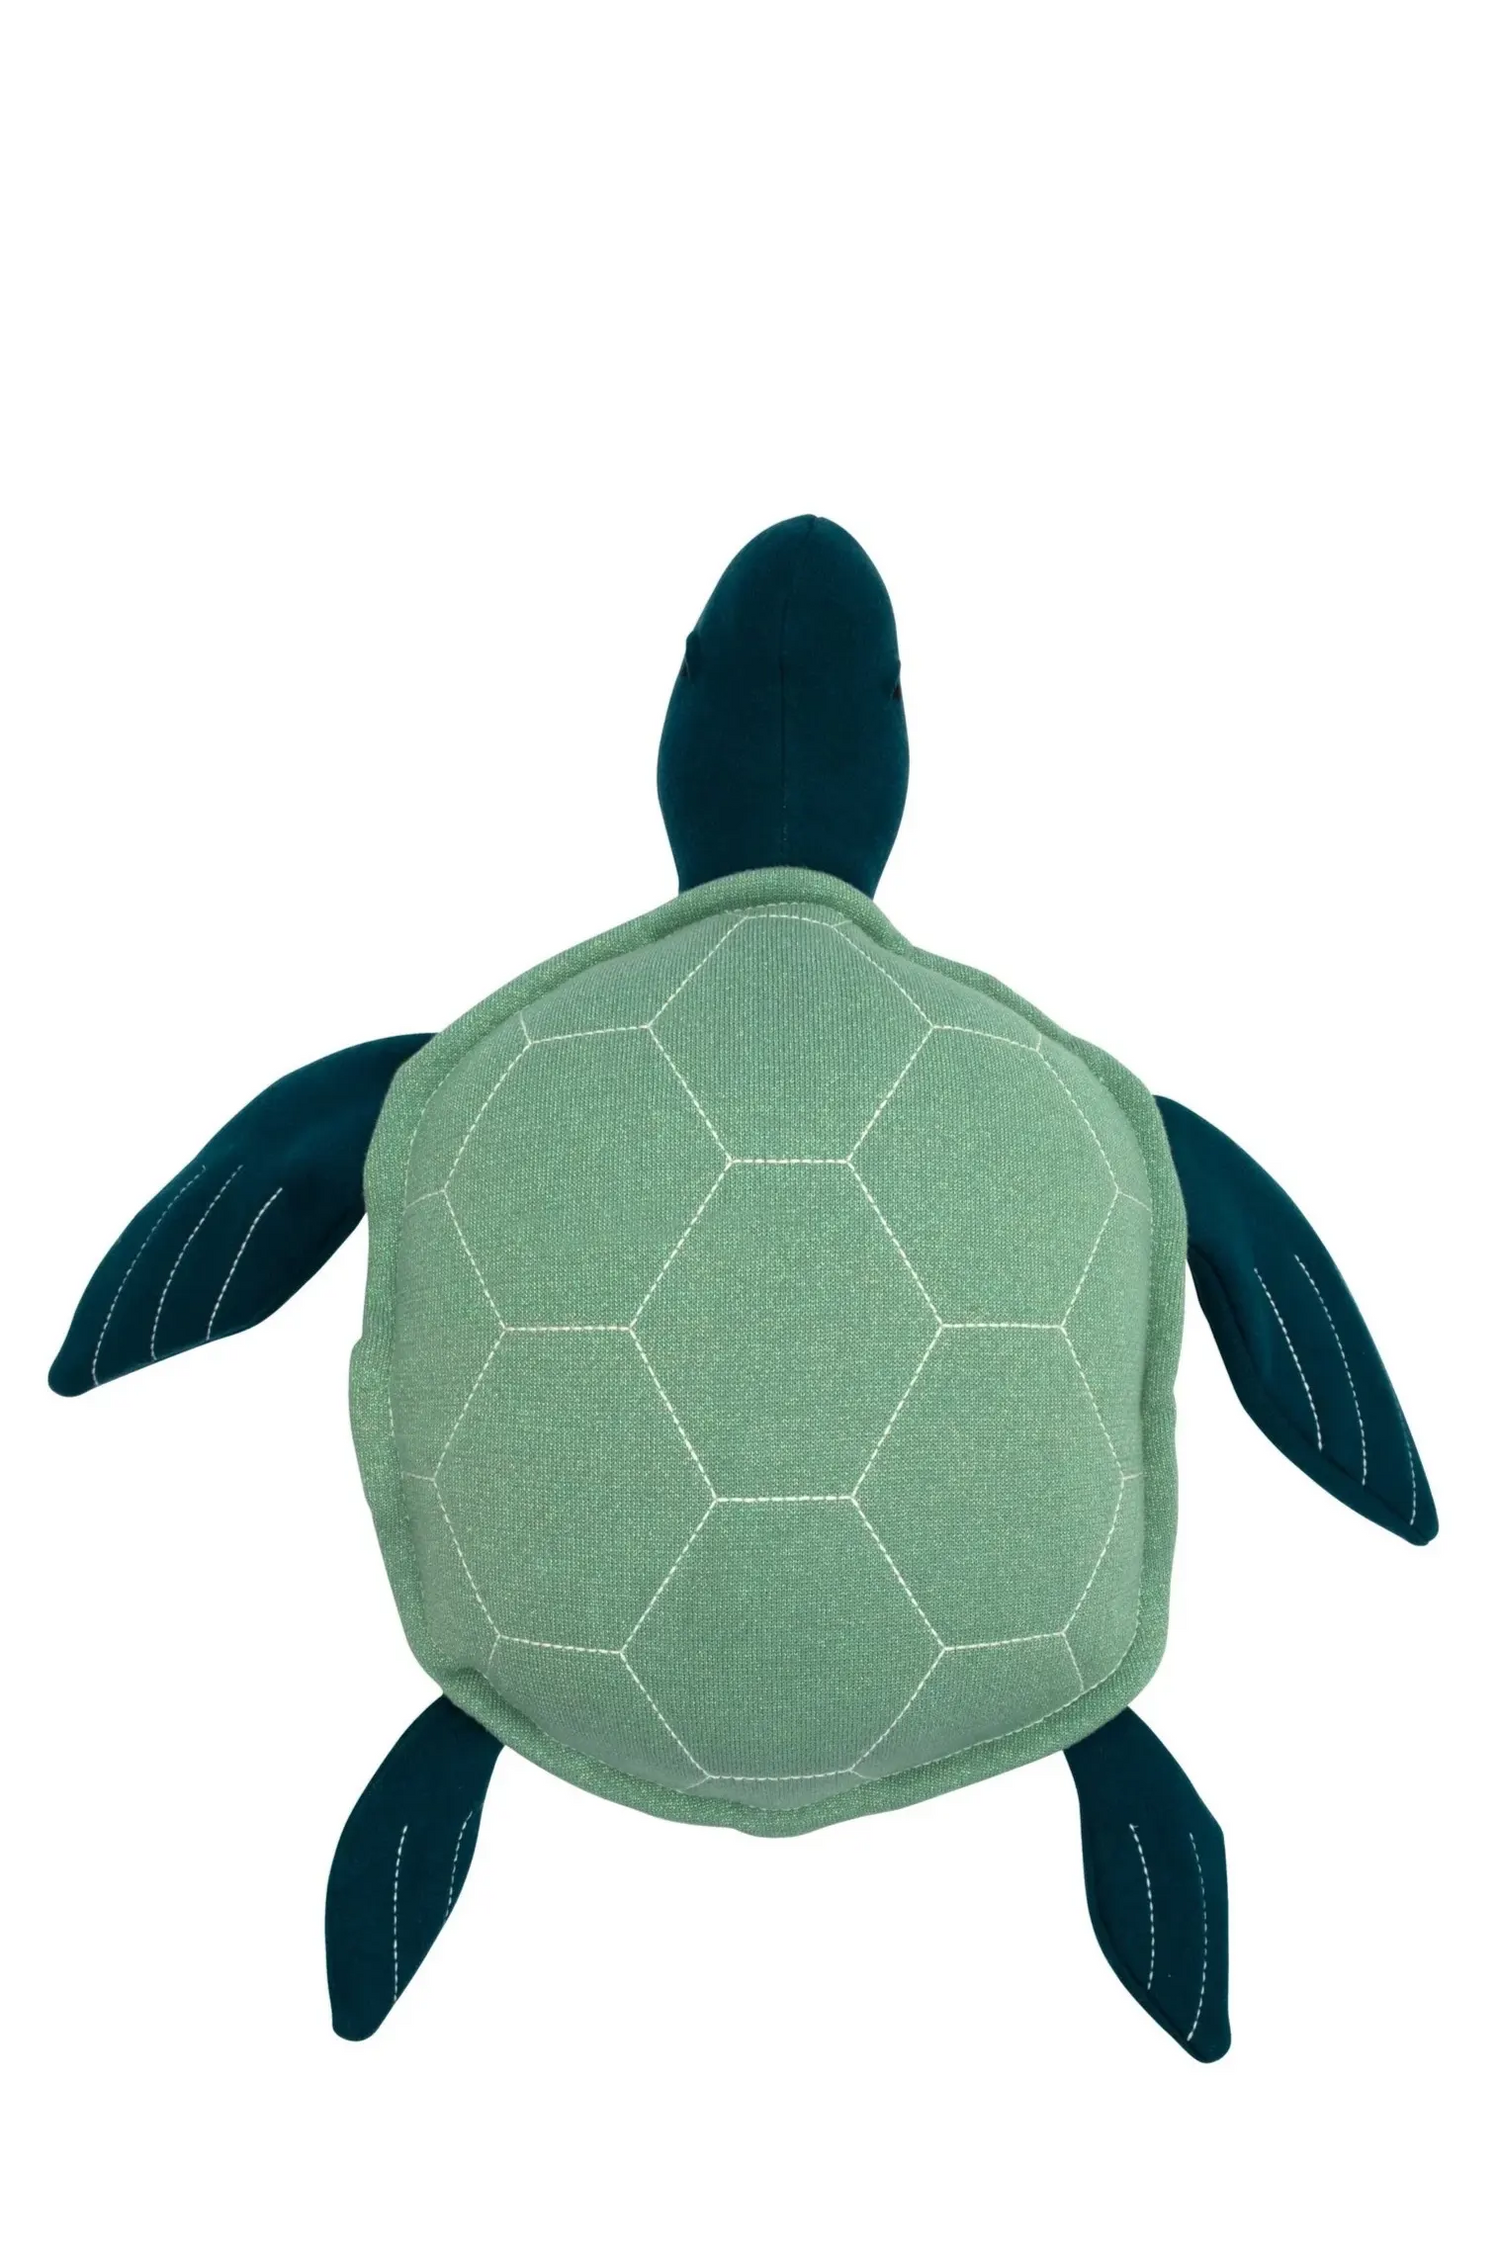 Louie Sea Turtle, large toy